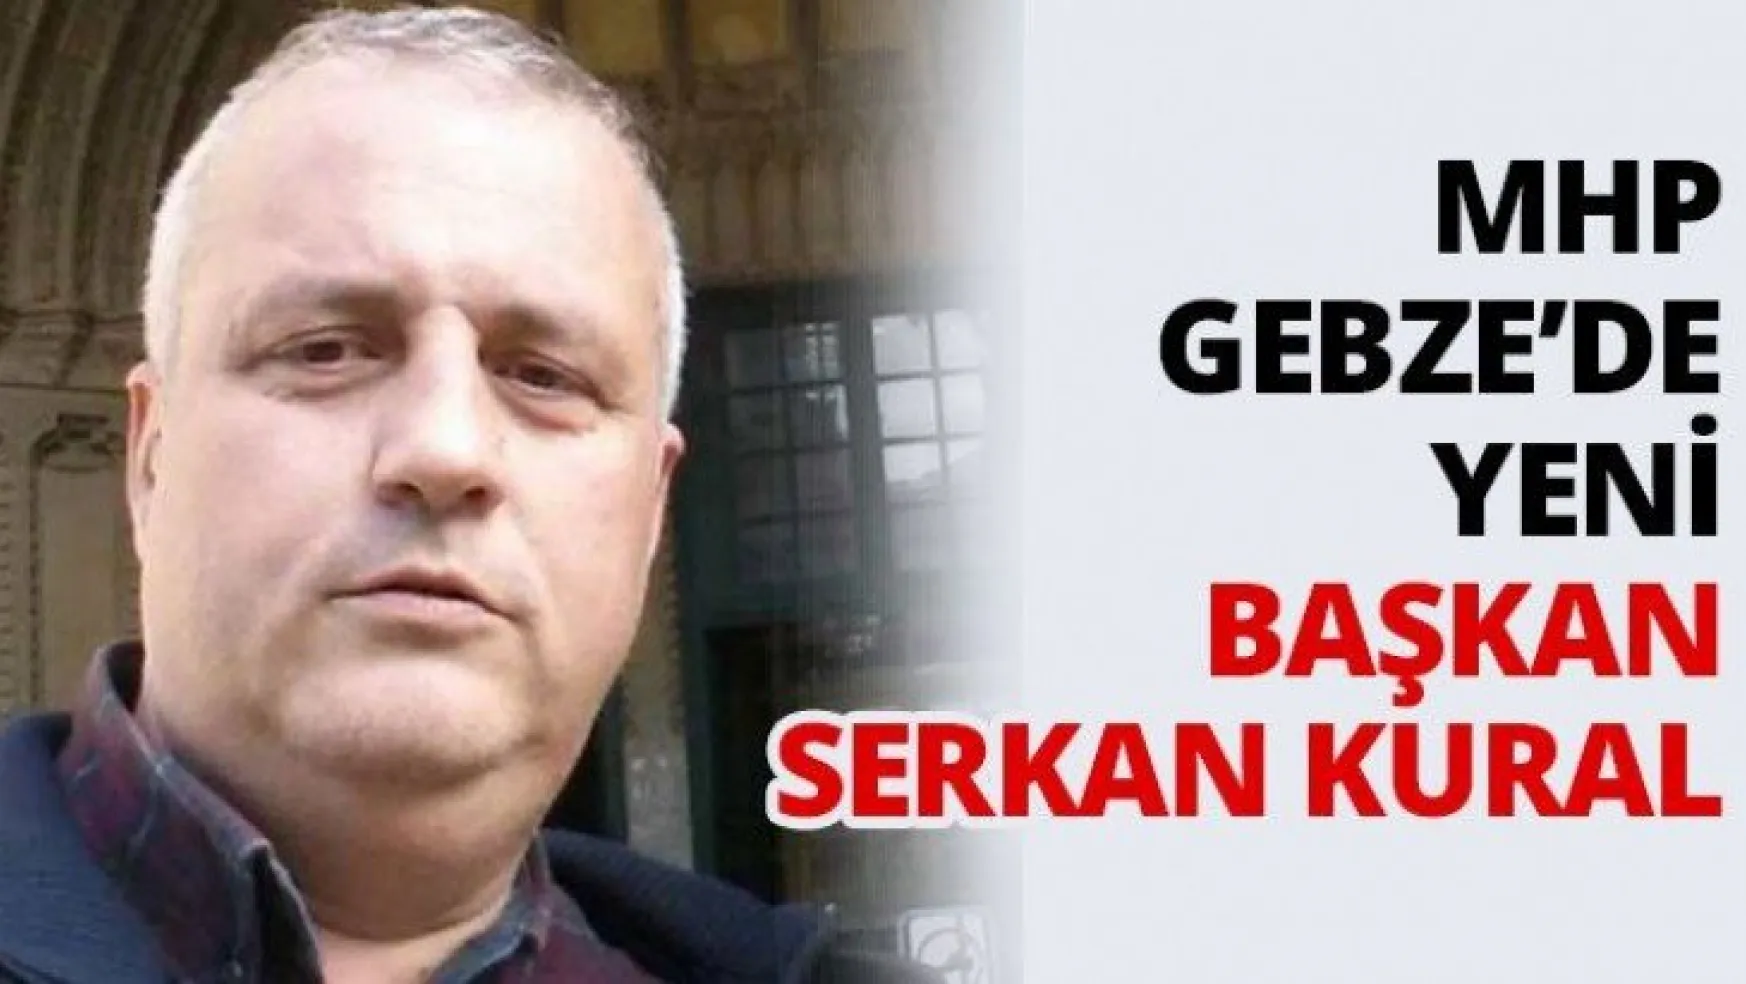 MHP Gebze'de yeni başkan Serkan Kural